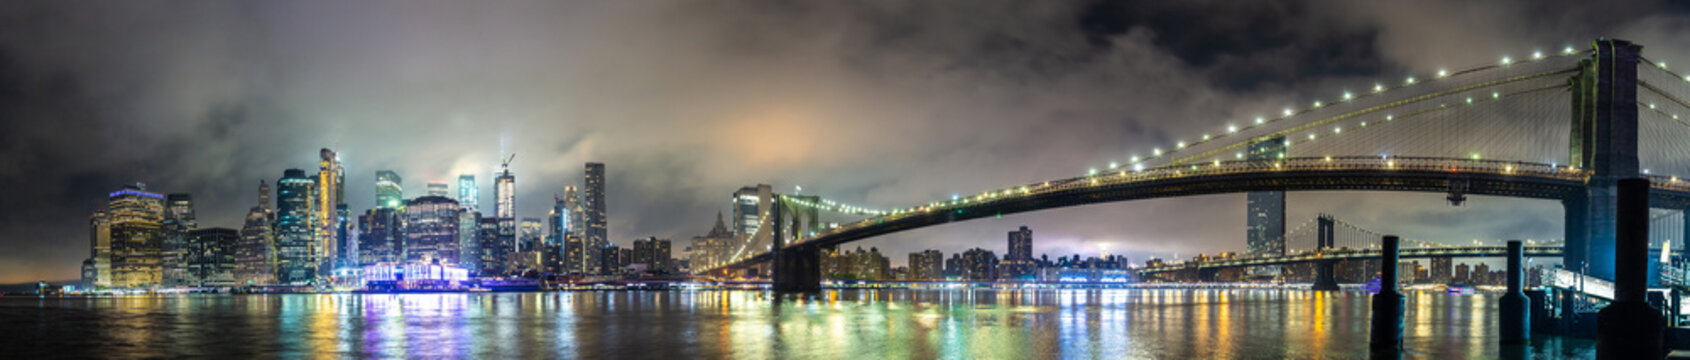 Fototapeta Brooklyn Bridge and Manhattan at night